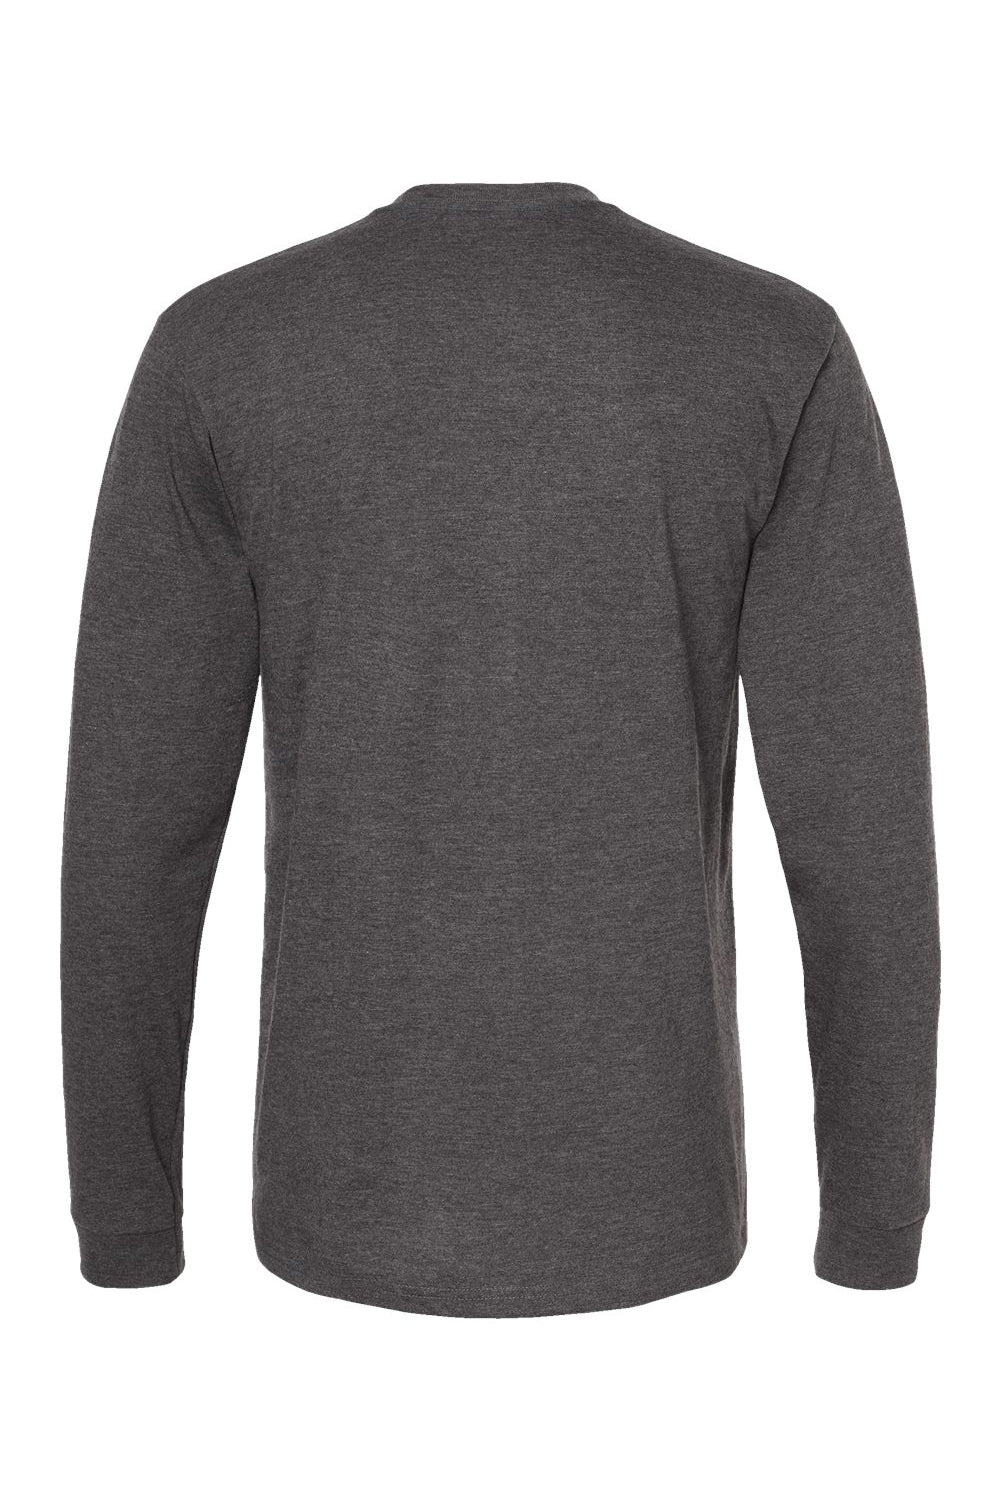 Tultex 291 Mens Jersey Long Sleeve Crewneck T-Shirt Heather Charcoal Grey Flat Back